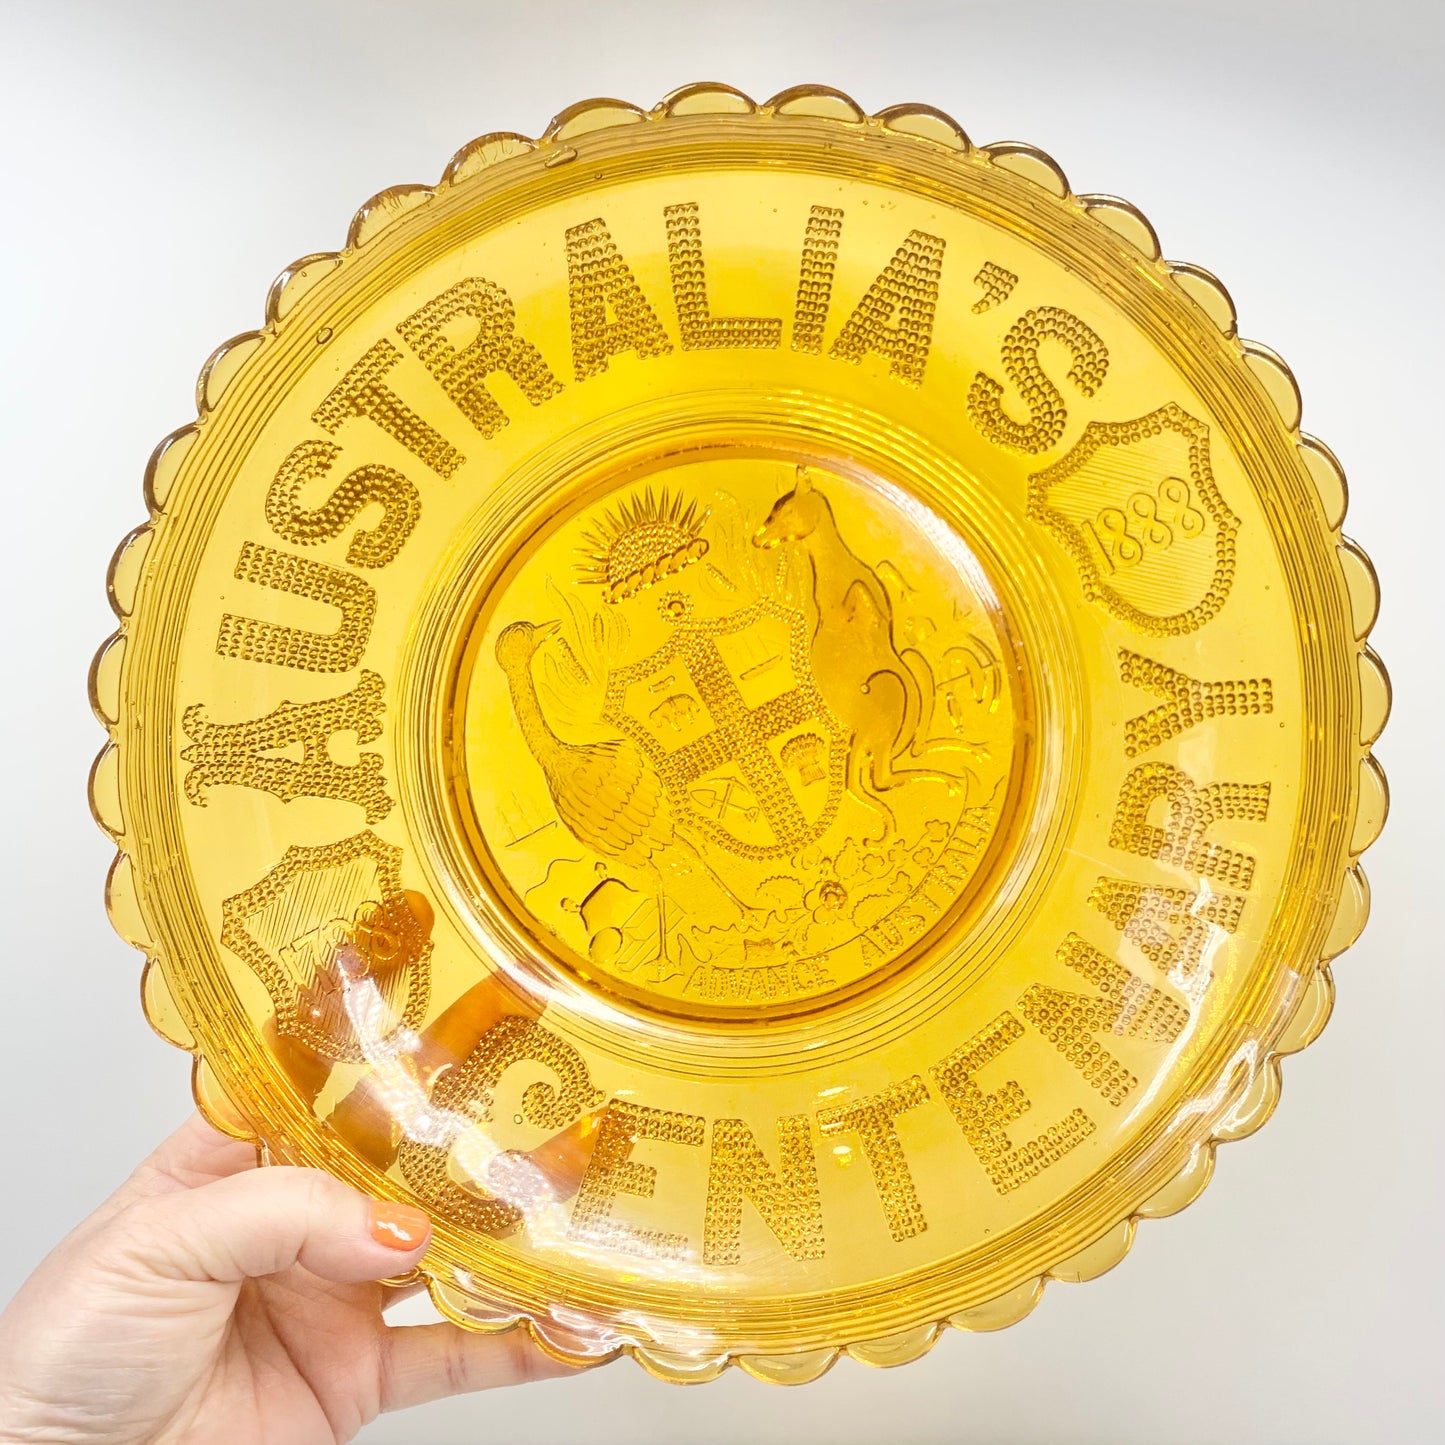 Antique highly collectible Australian amber glass centenary bowl circa 1888